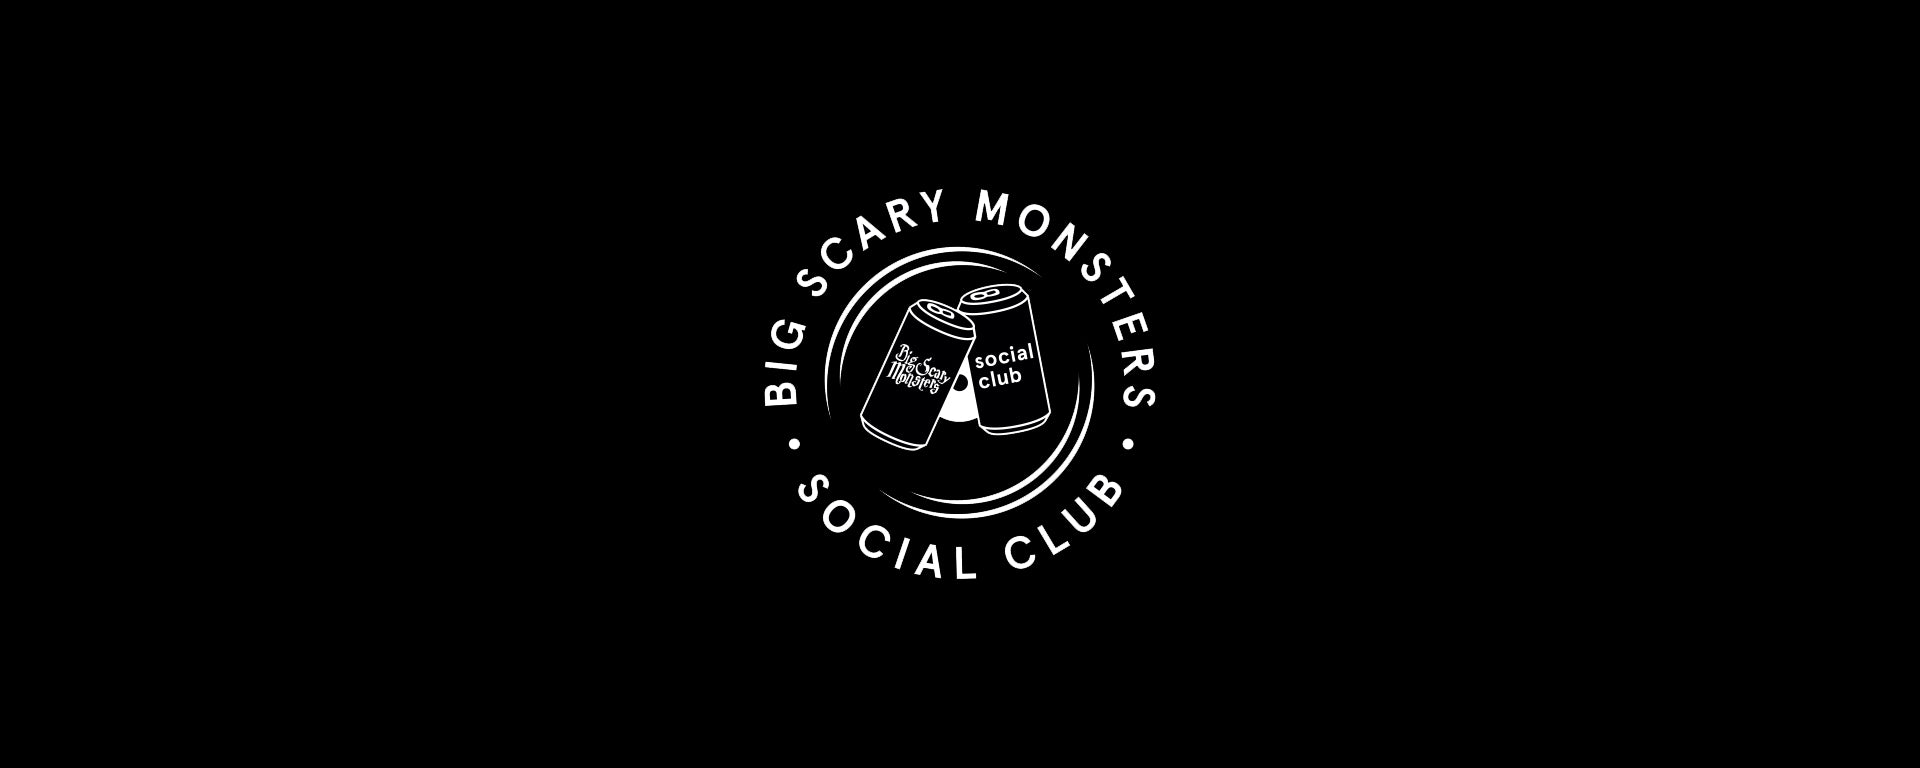 BSM Social Club